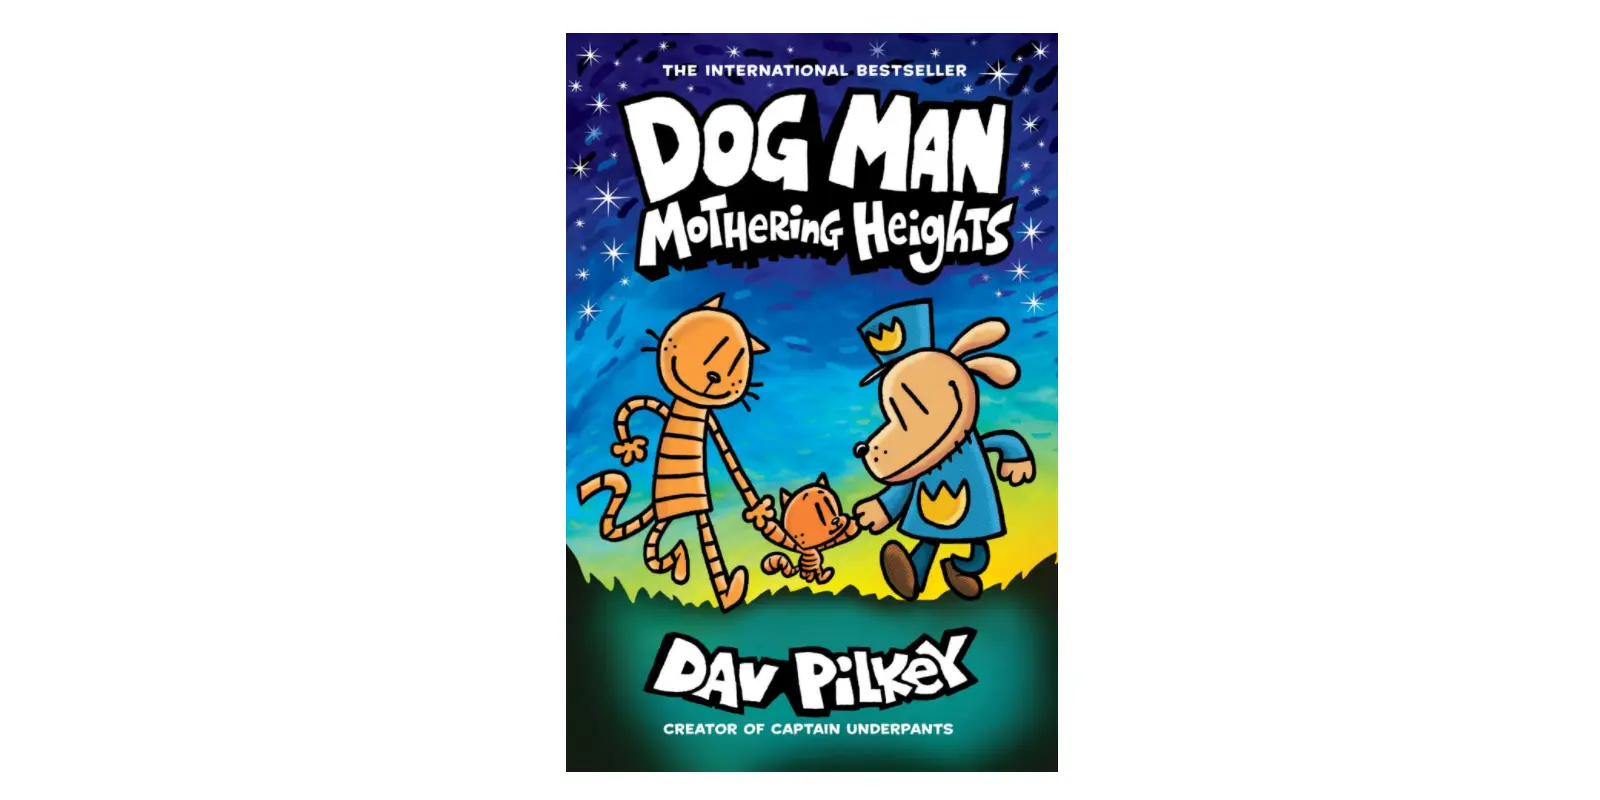 Amazon - Dog Man: Mothering Heights (Dog Man #10)